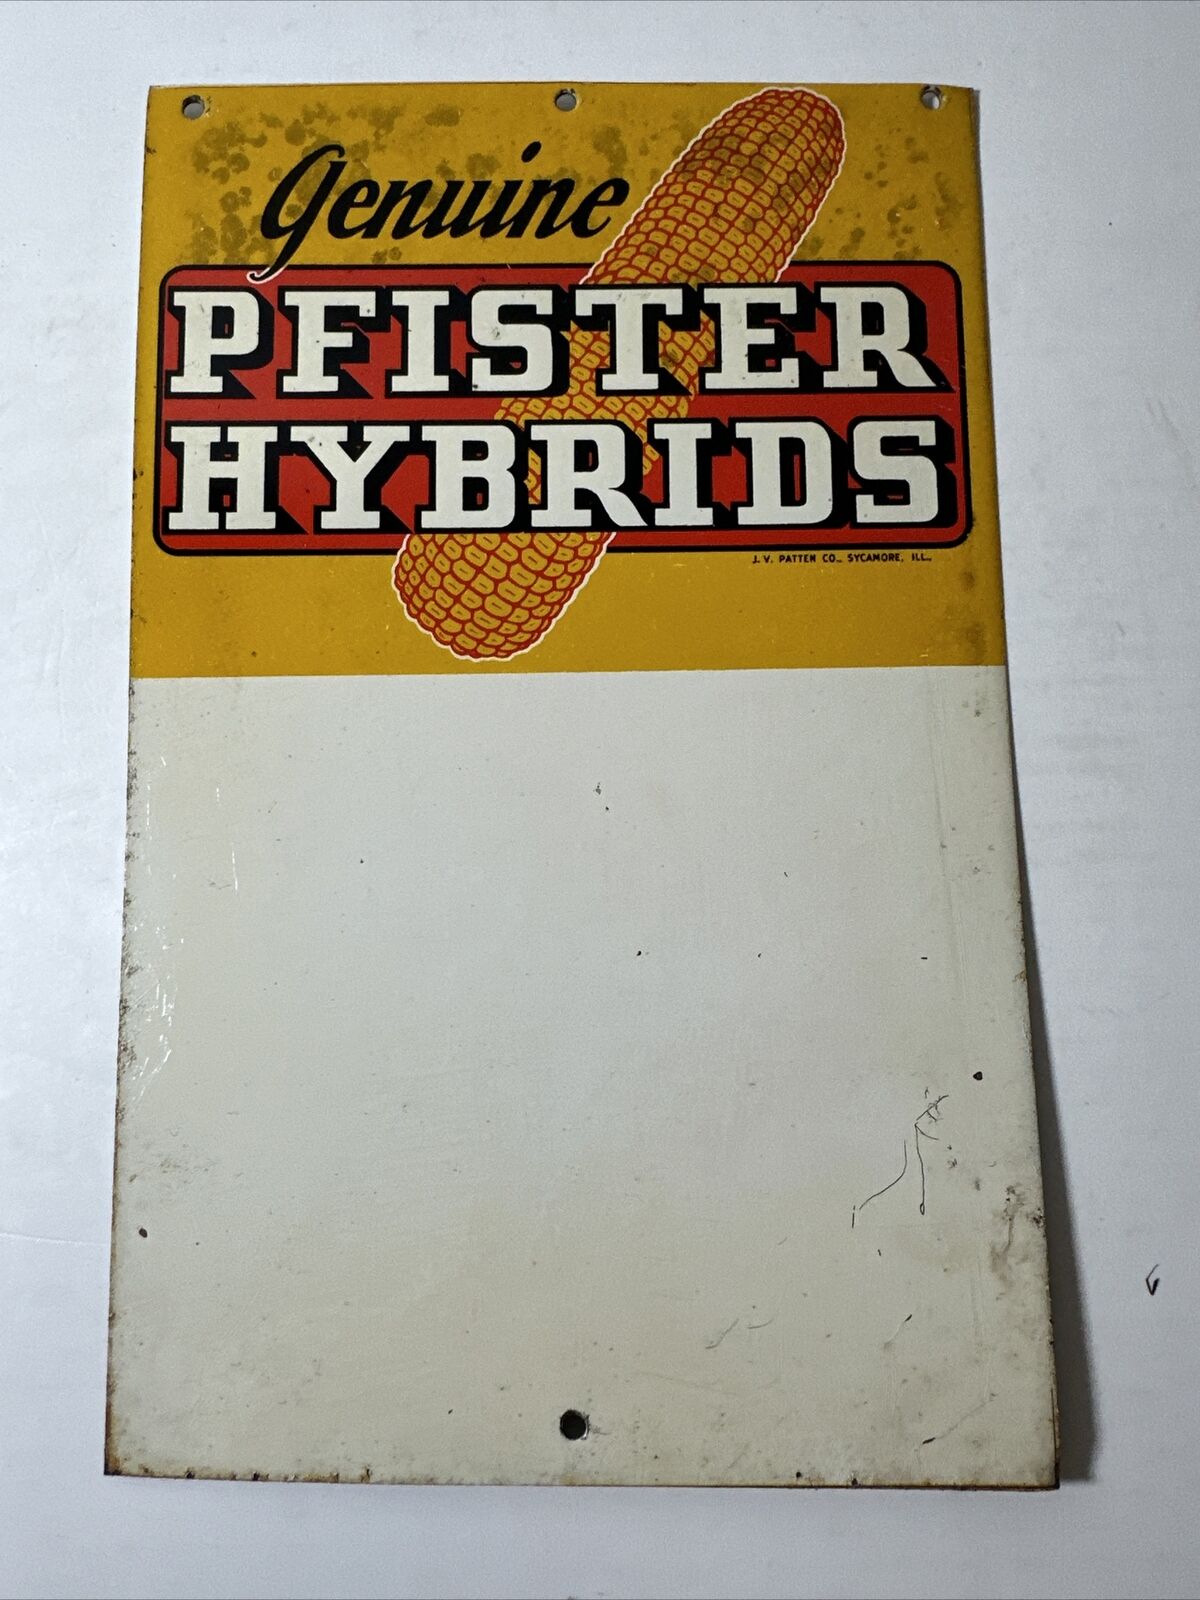 Vintage Pfister Hybrid Corn Farm Sign Measures 8in X 5in 